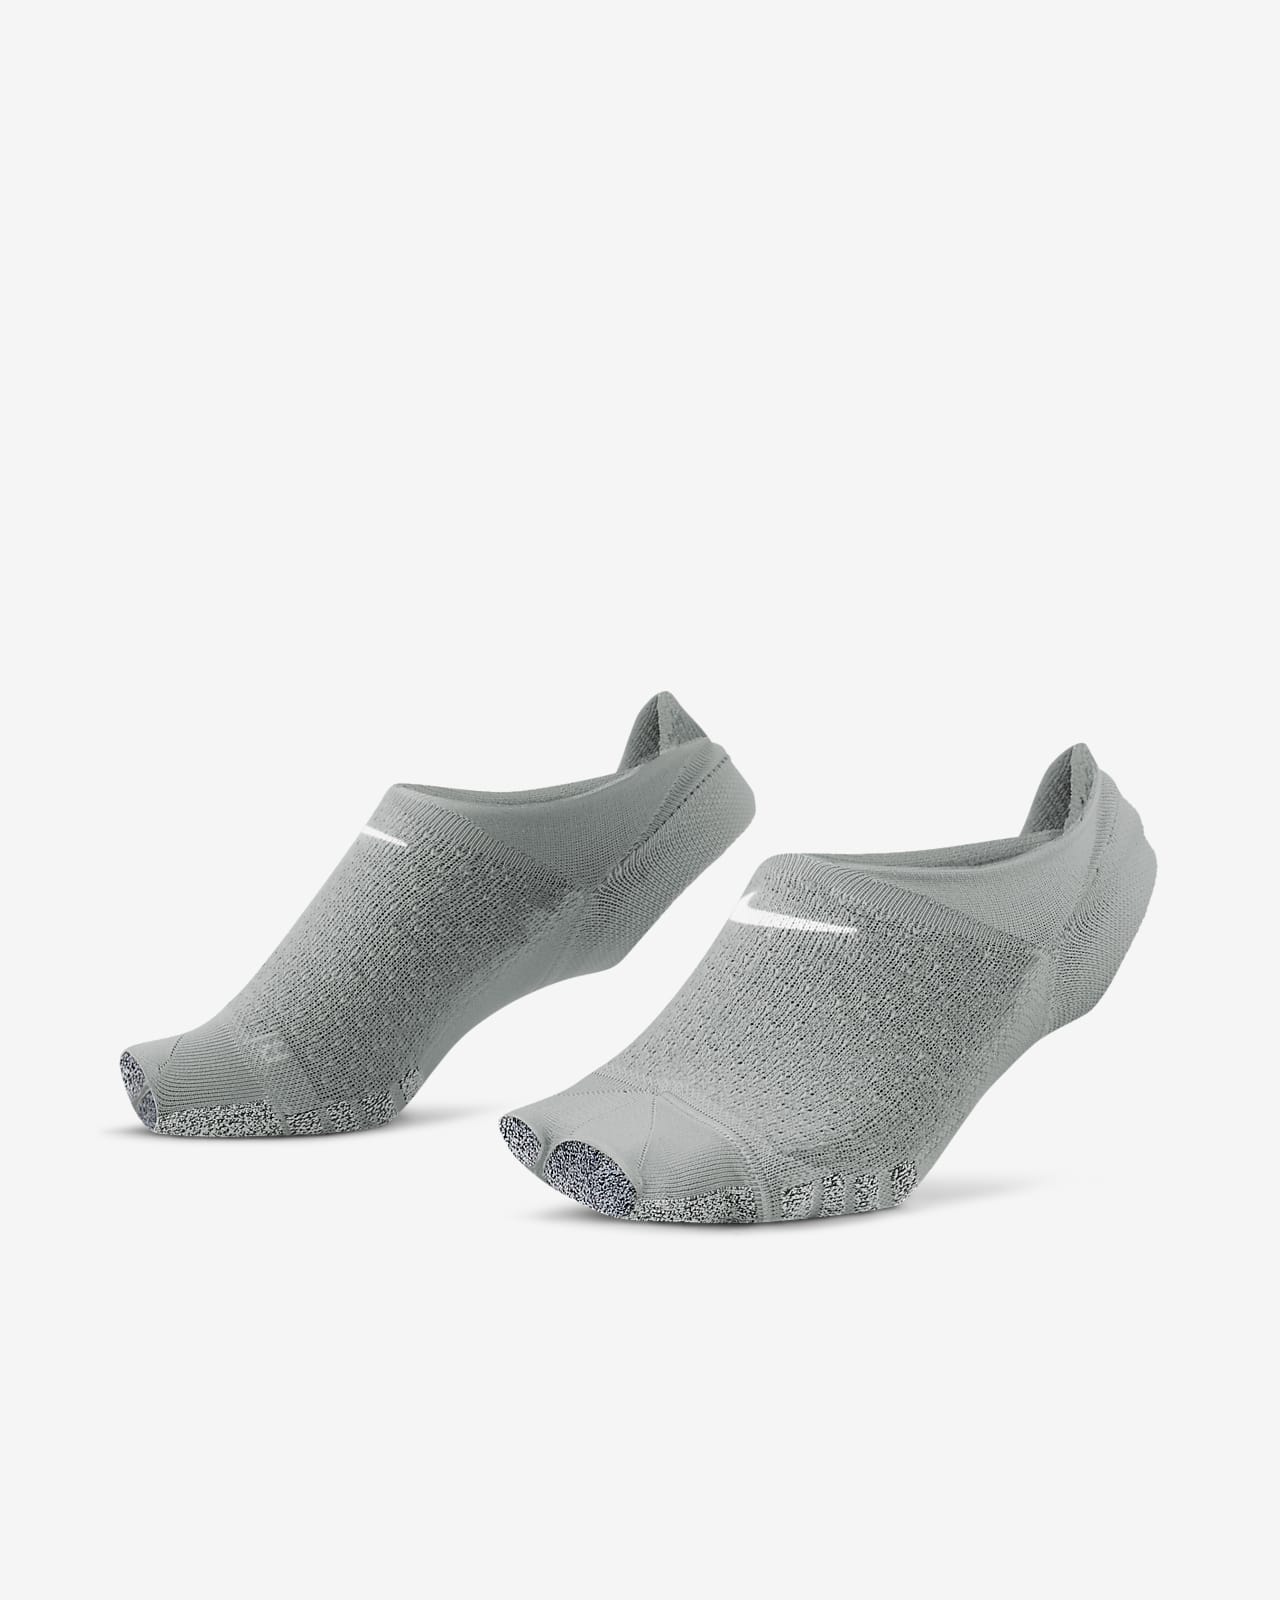 NIKE GRIP Black, Grey, White Fitness Toeless/Heelless Footie Socks. Sz Med.  NEW. 